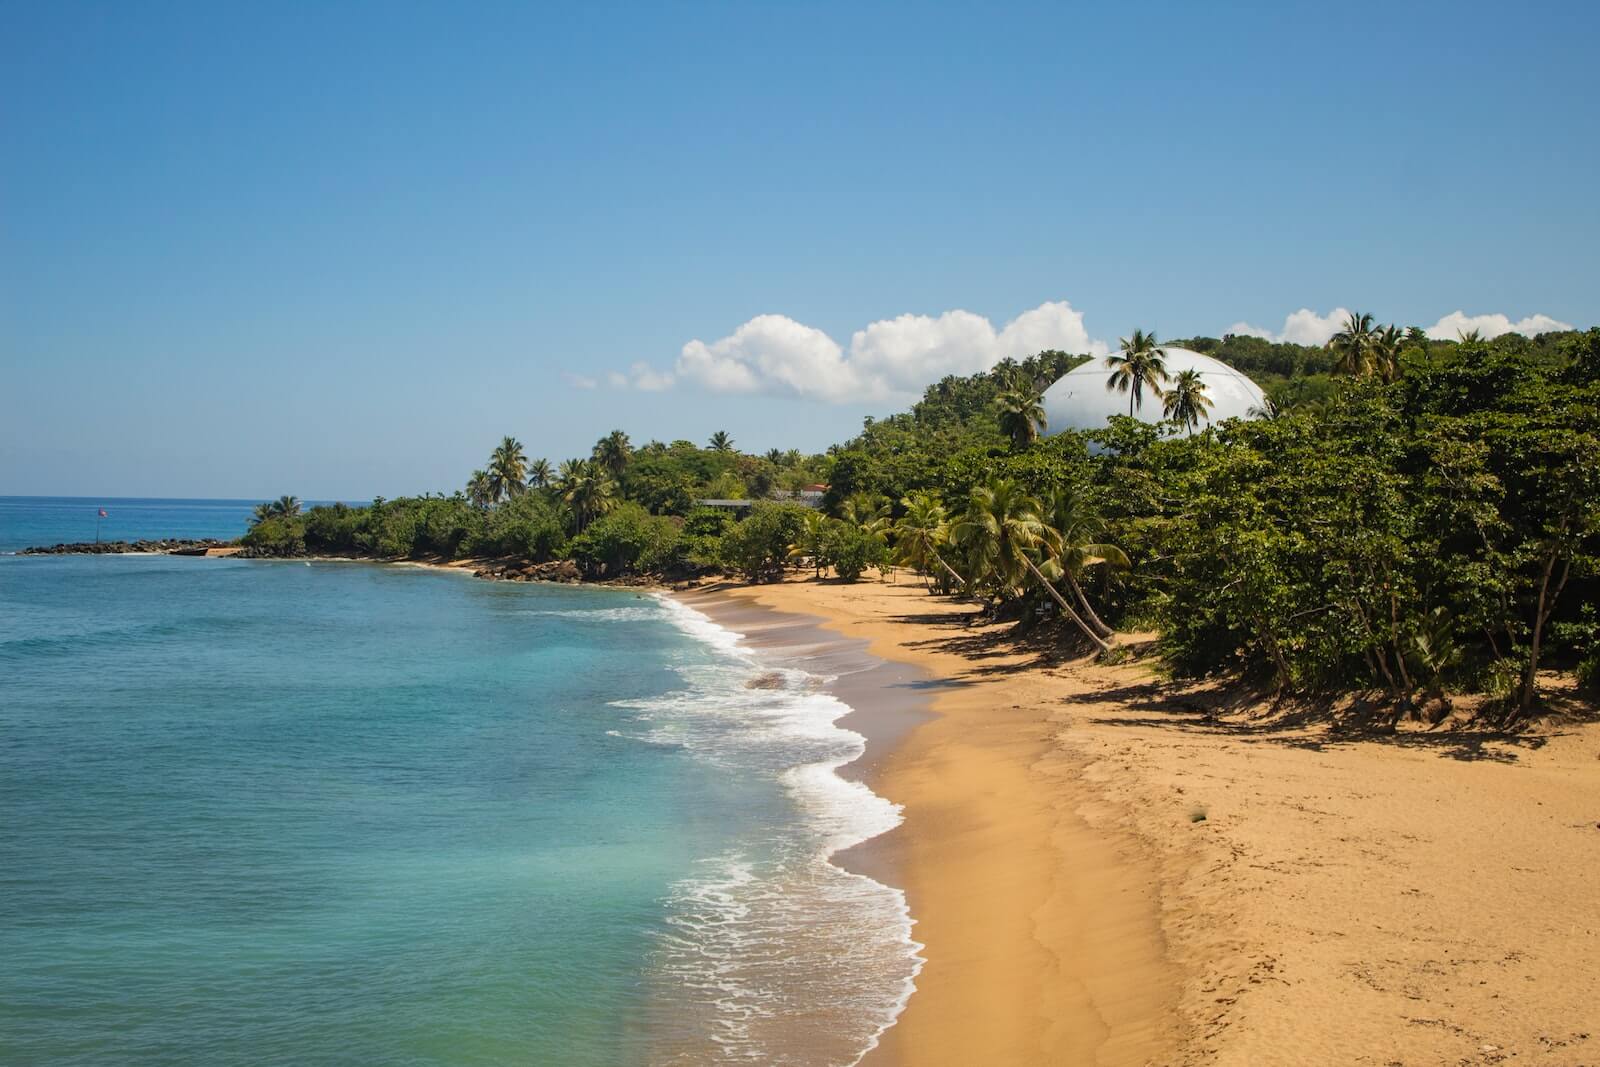 The beach in Rincon, Puerto Rico